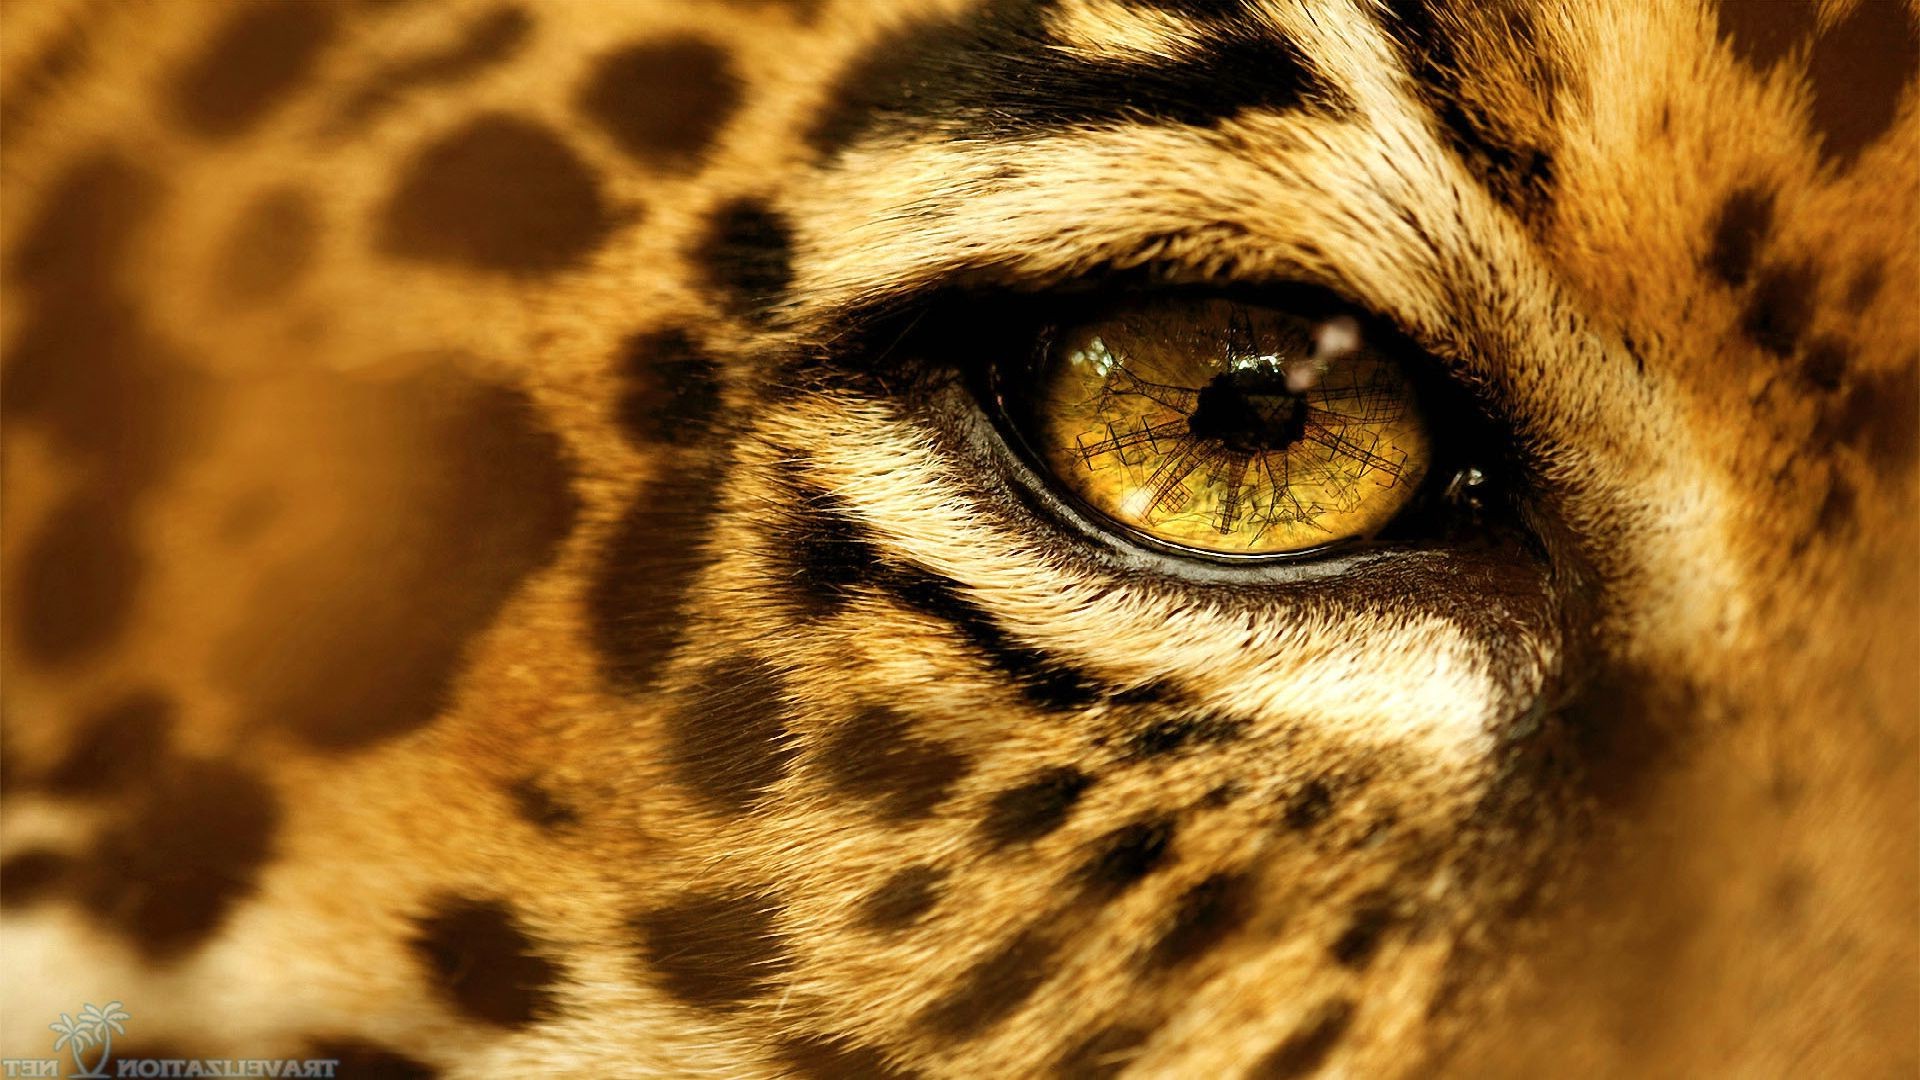 Wallpapers animals eyes wildlife on the desktop